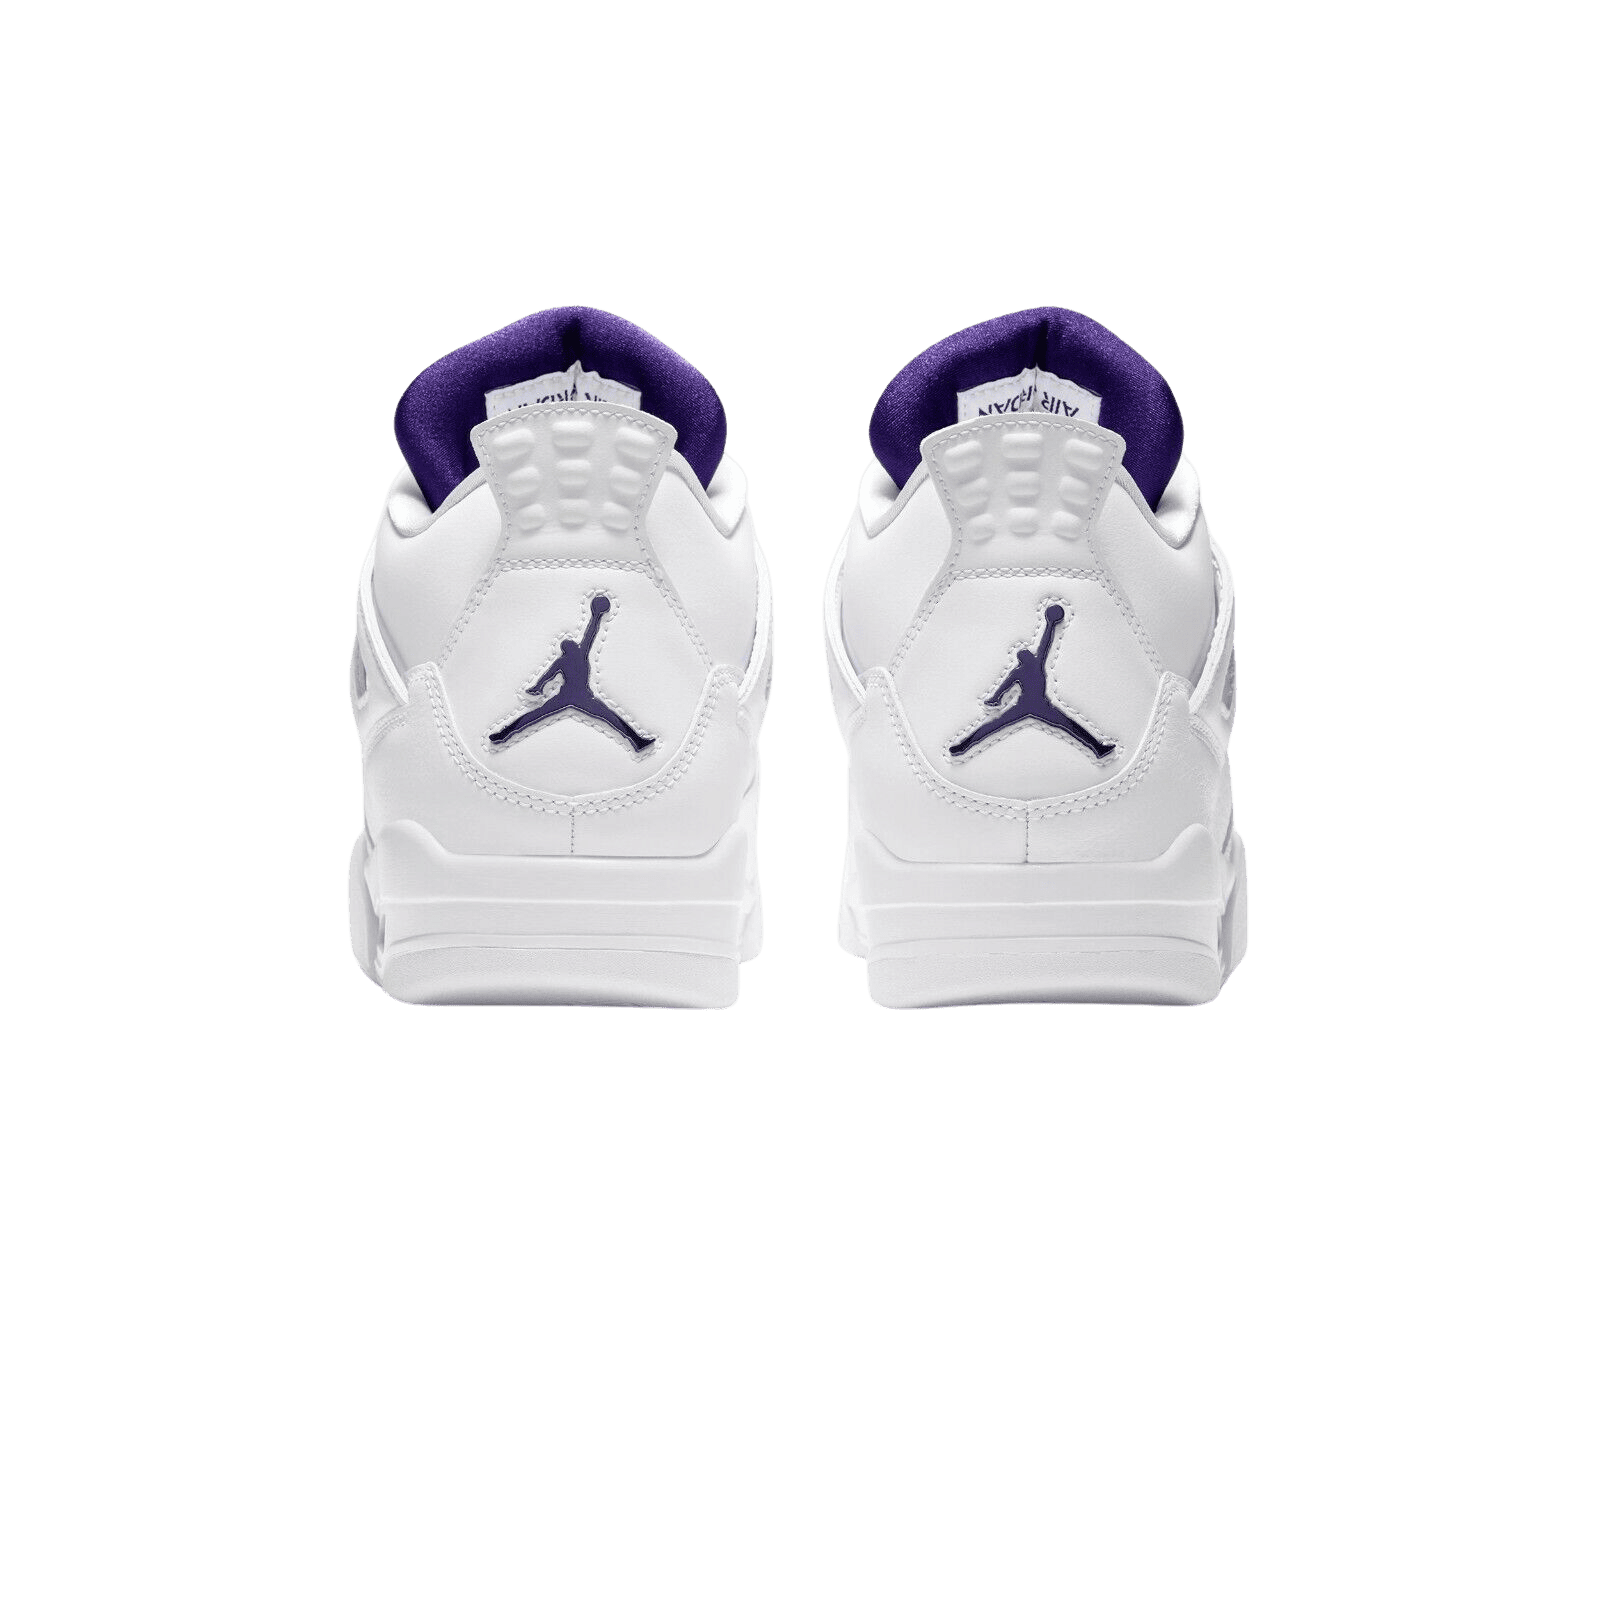 All About Jordan 4 Retro Metallic Purple Sneakers | eBay